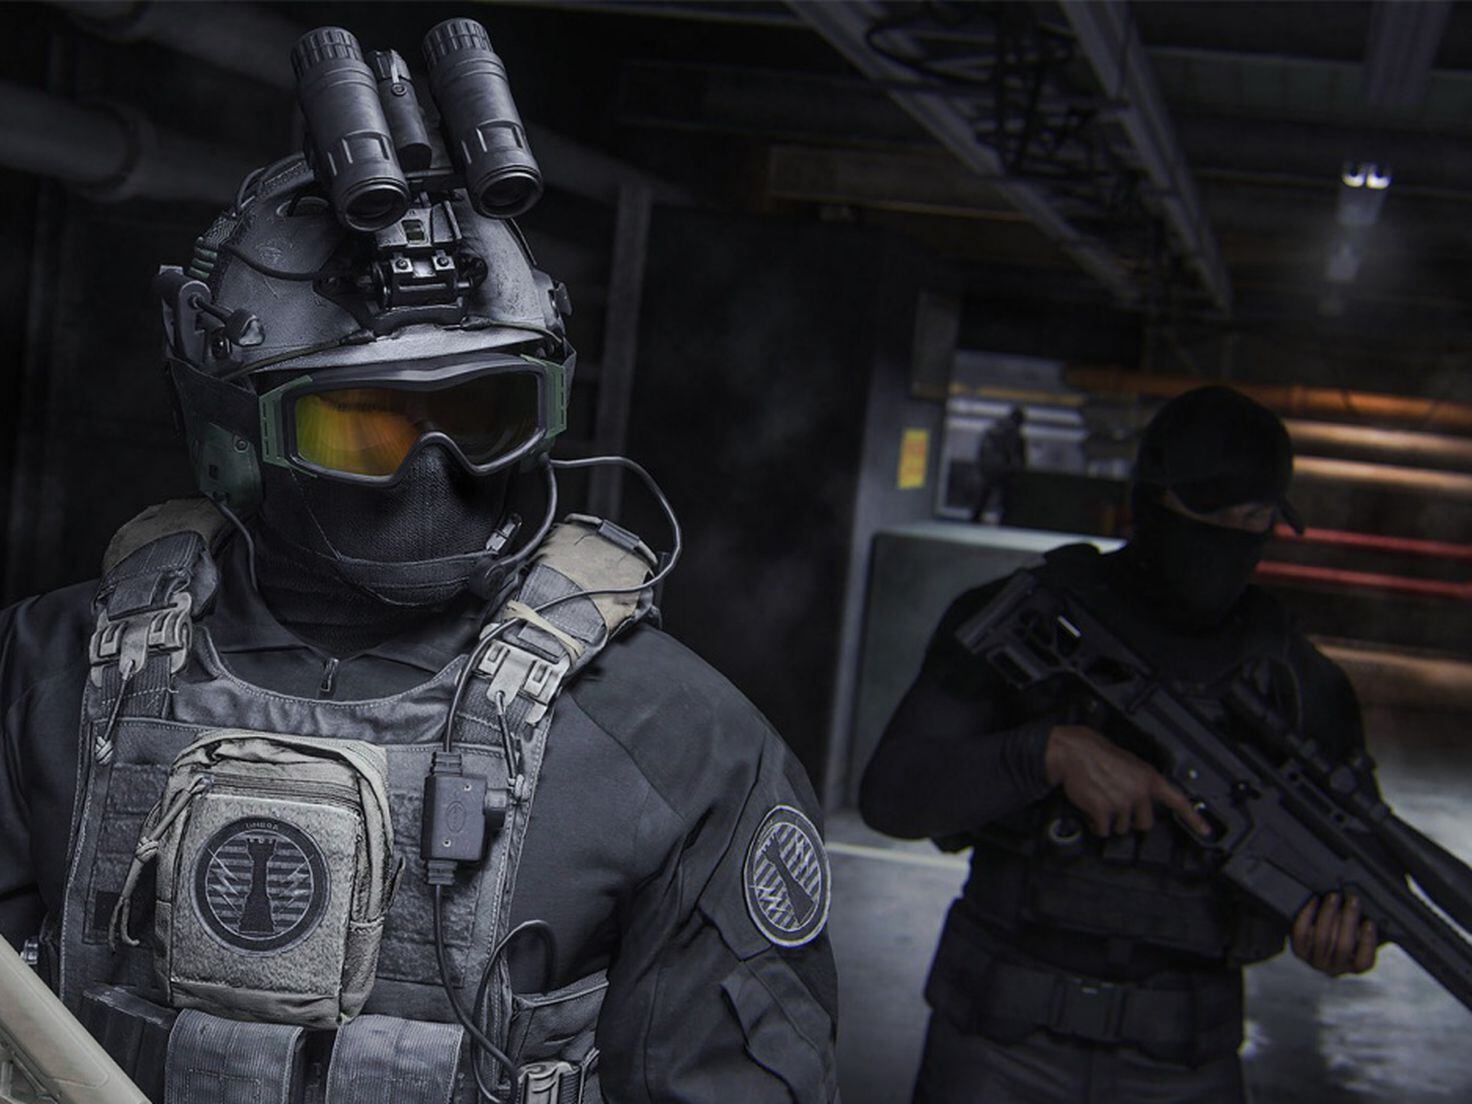 Worldwide Reveal: Announcing Call of Duty: Modern Warfare III